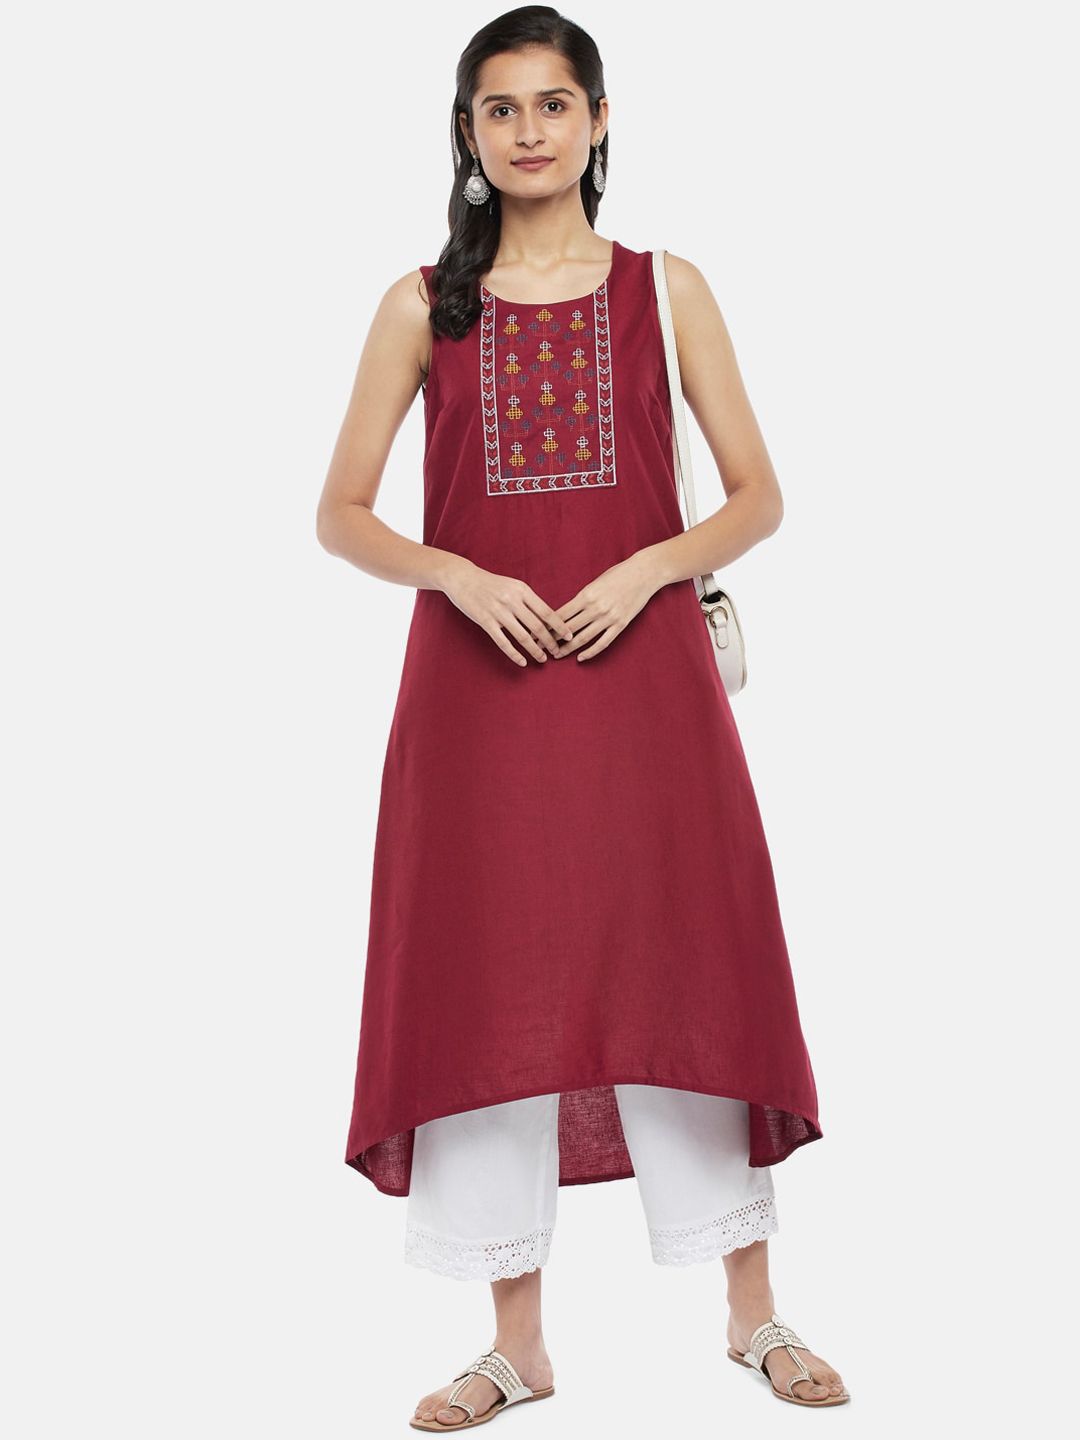 RANGMANCH BY PANTALOONS Women Red Geometric Yoke Design Cotton Kurta Price in India